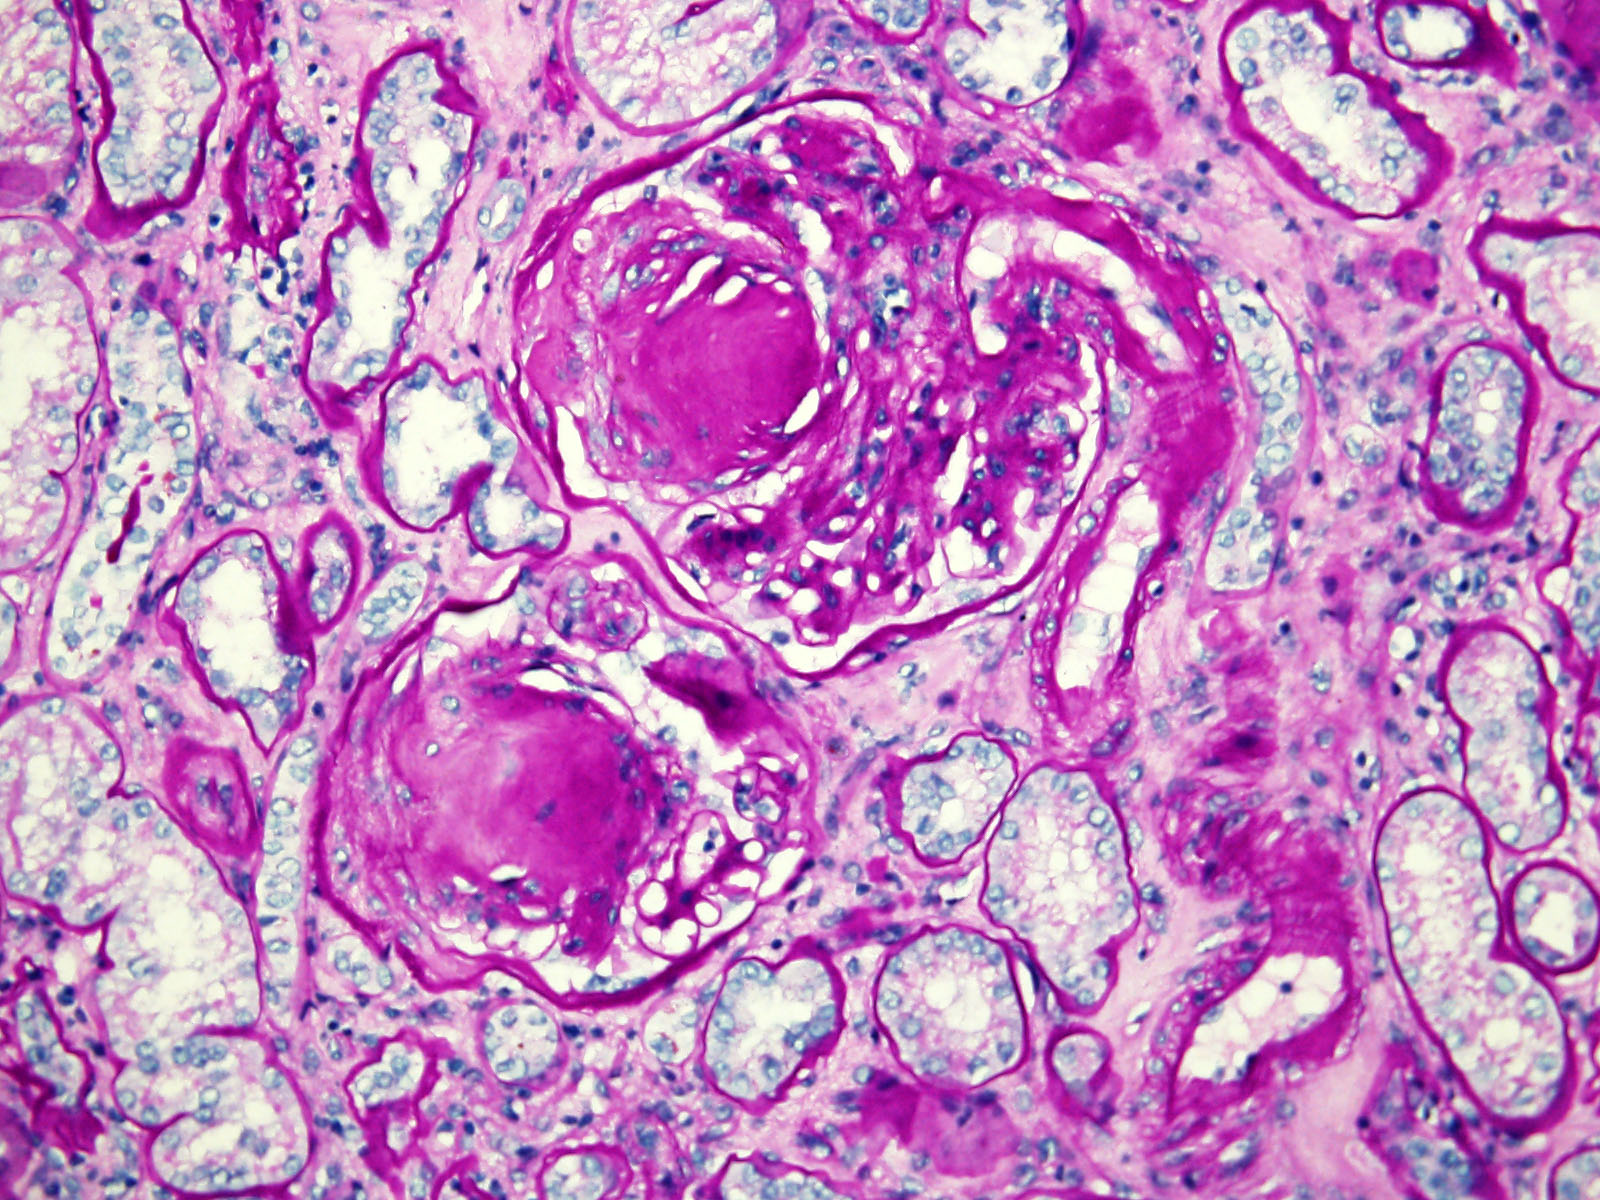 Kimmelstiel-Wilson nodules, hyaline arteriolosclerosis